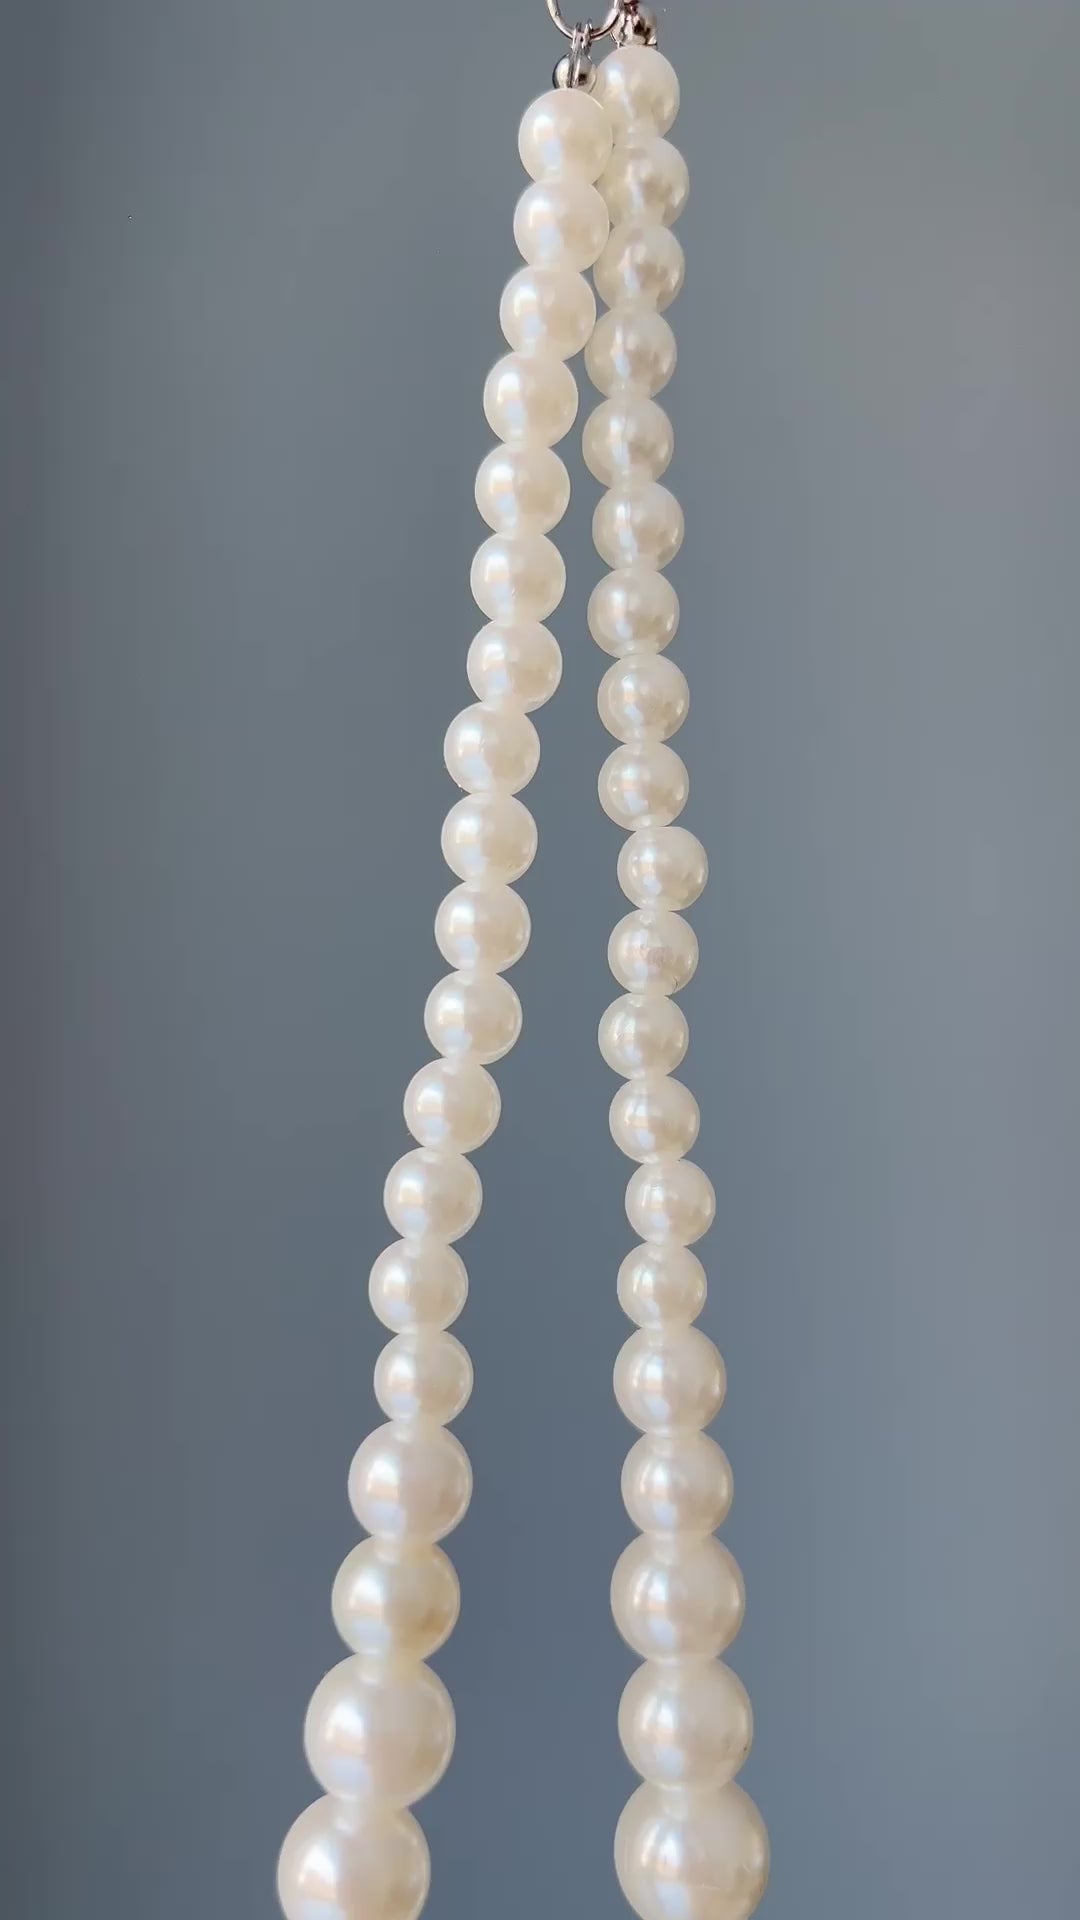 Perlekjede- trillende perler